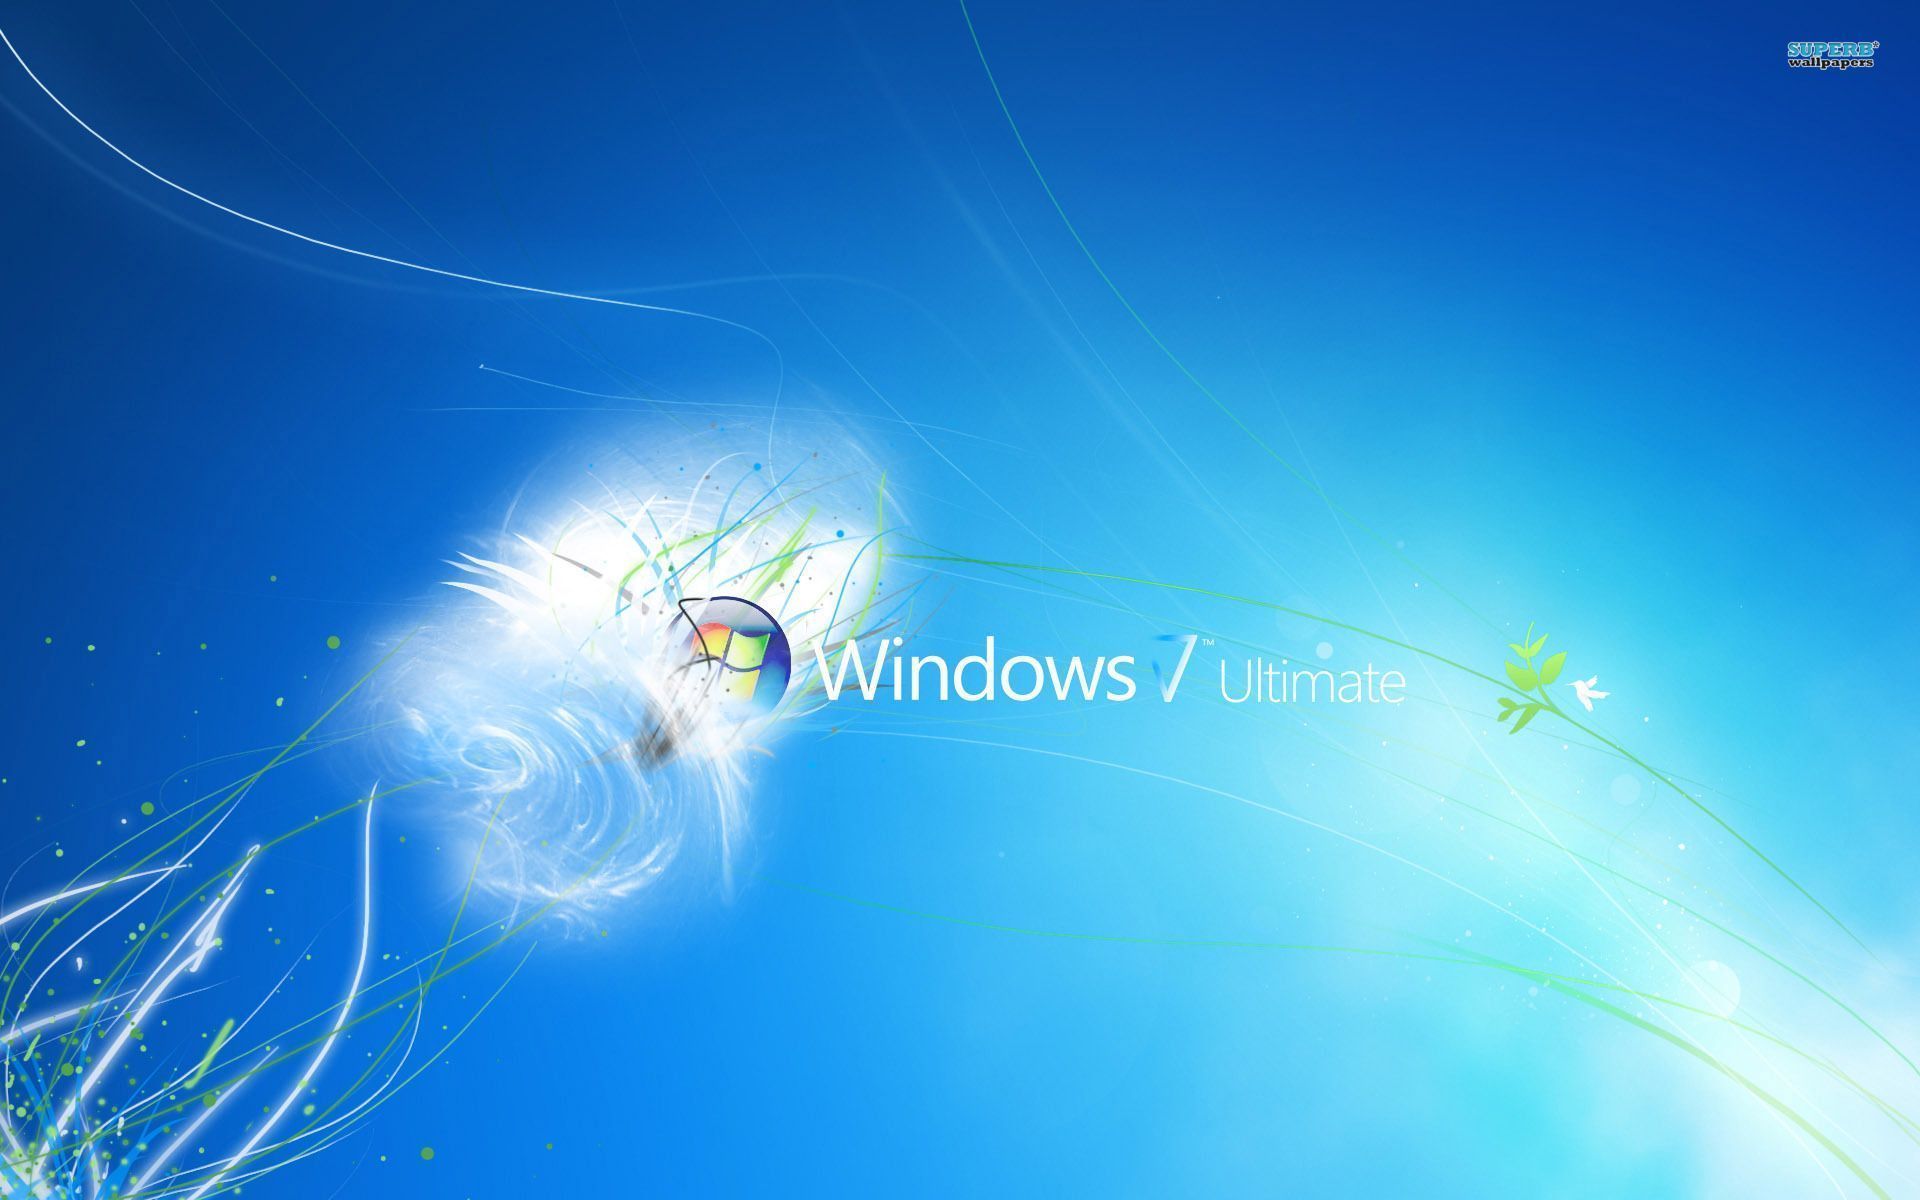 Windows 7 Ultimate wallpaper - Computer wallpapers -